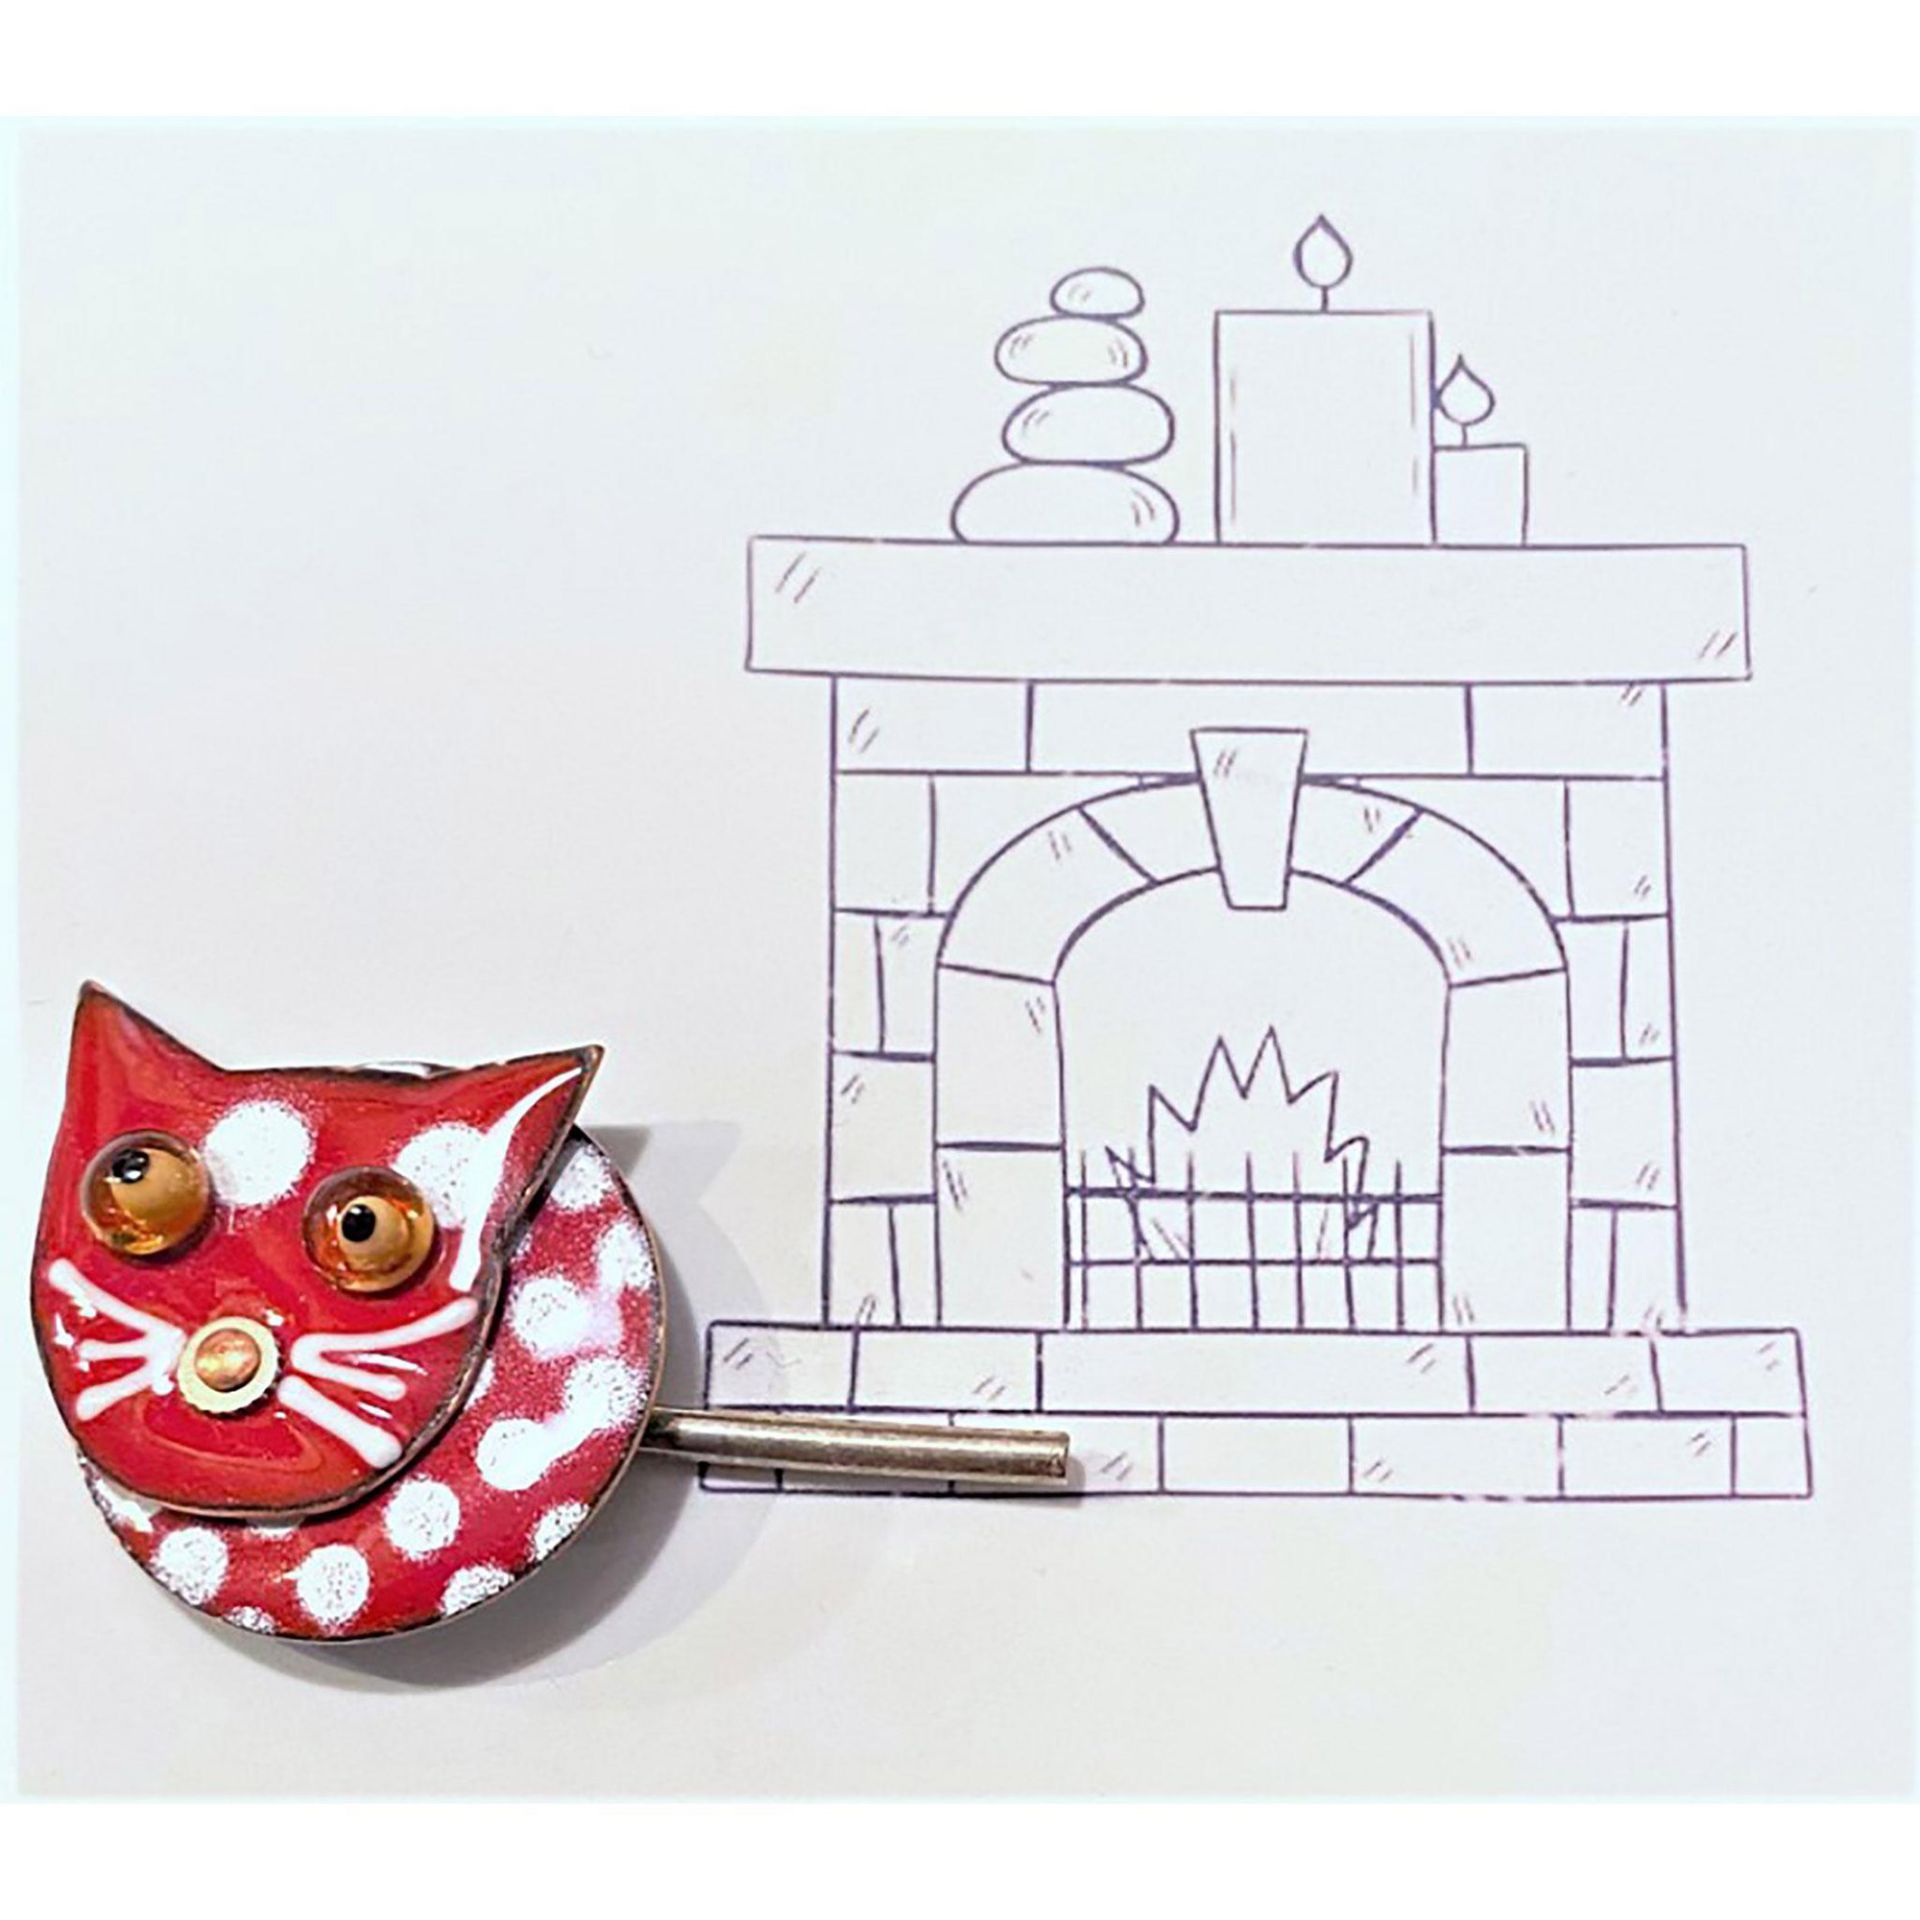 A Division Three Studio Artist Cat Button - Image 2 of 3